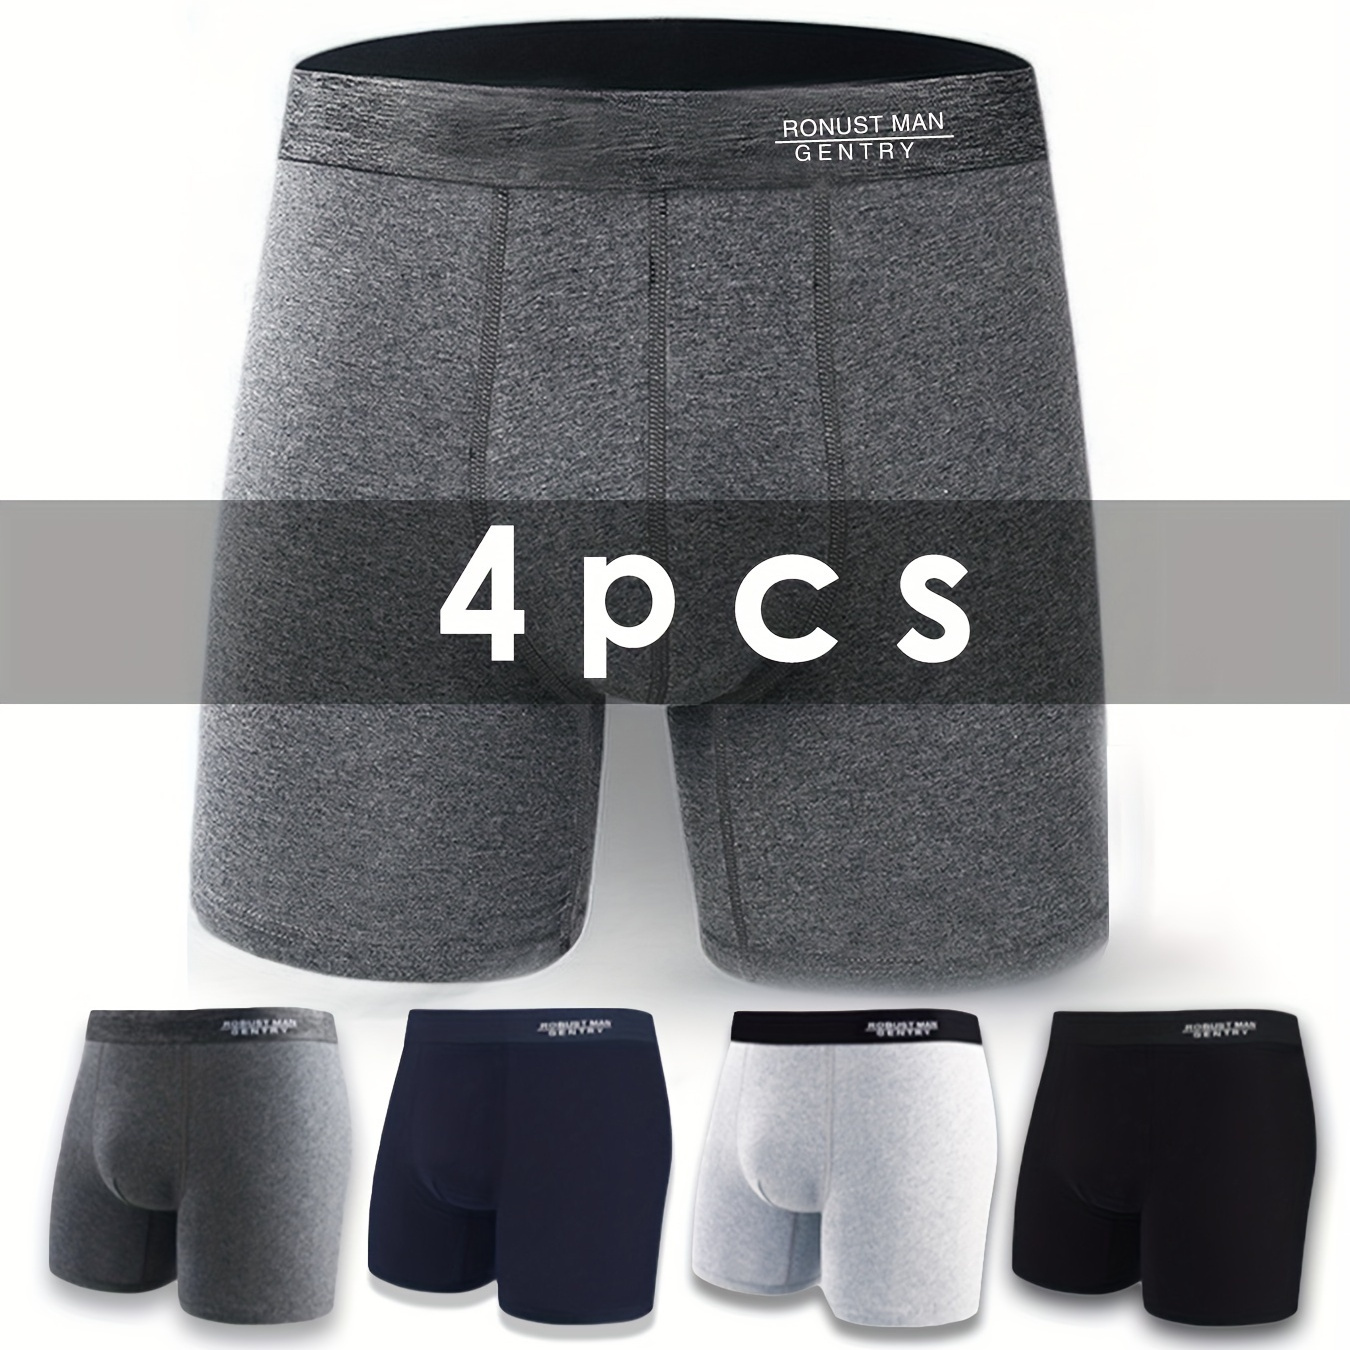 

4pcs Cotton Comfy Long Style Men's Underwear Set Anti-wear Legs Comfortable Breathable Sports Boxer Briefs Set Underwear Not Easy To Strangle